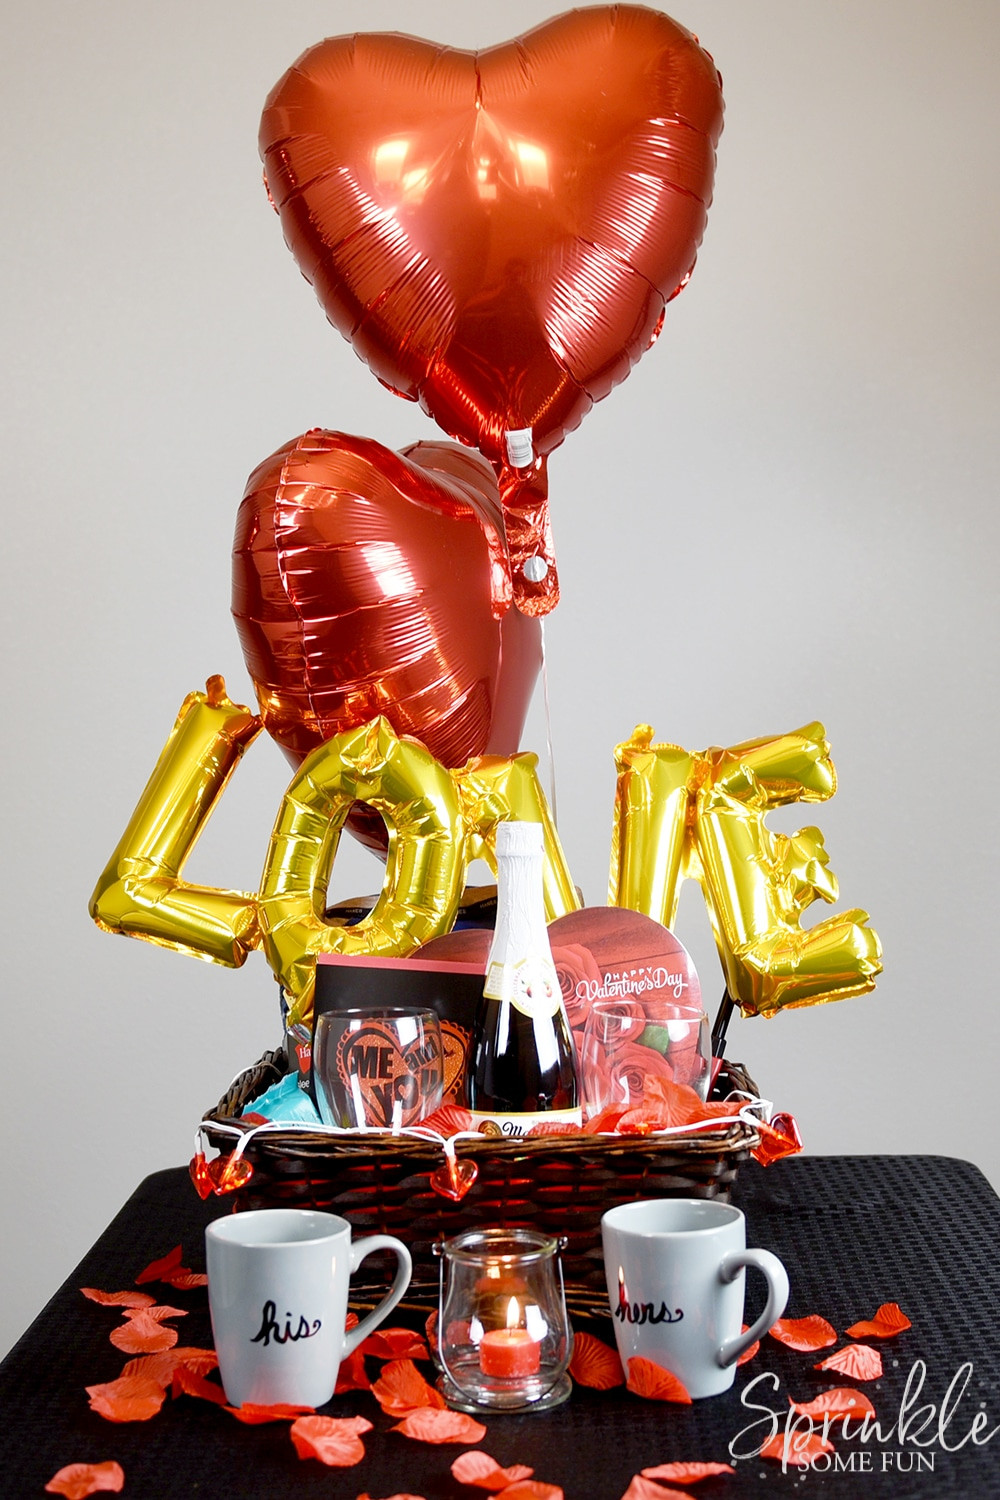 Valentines Gift Baskets Ideas
 Romantic Valentine Gift Basket Ideas ⋆ Sprinkle Some Fun